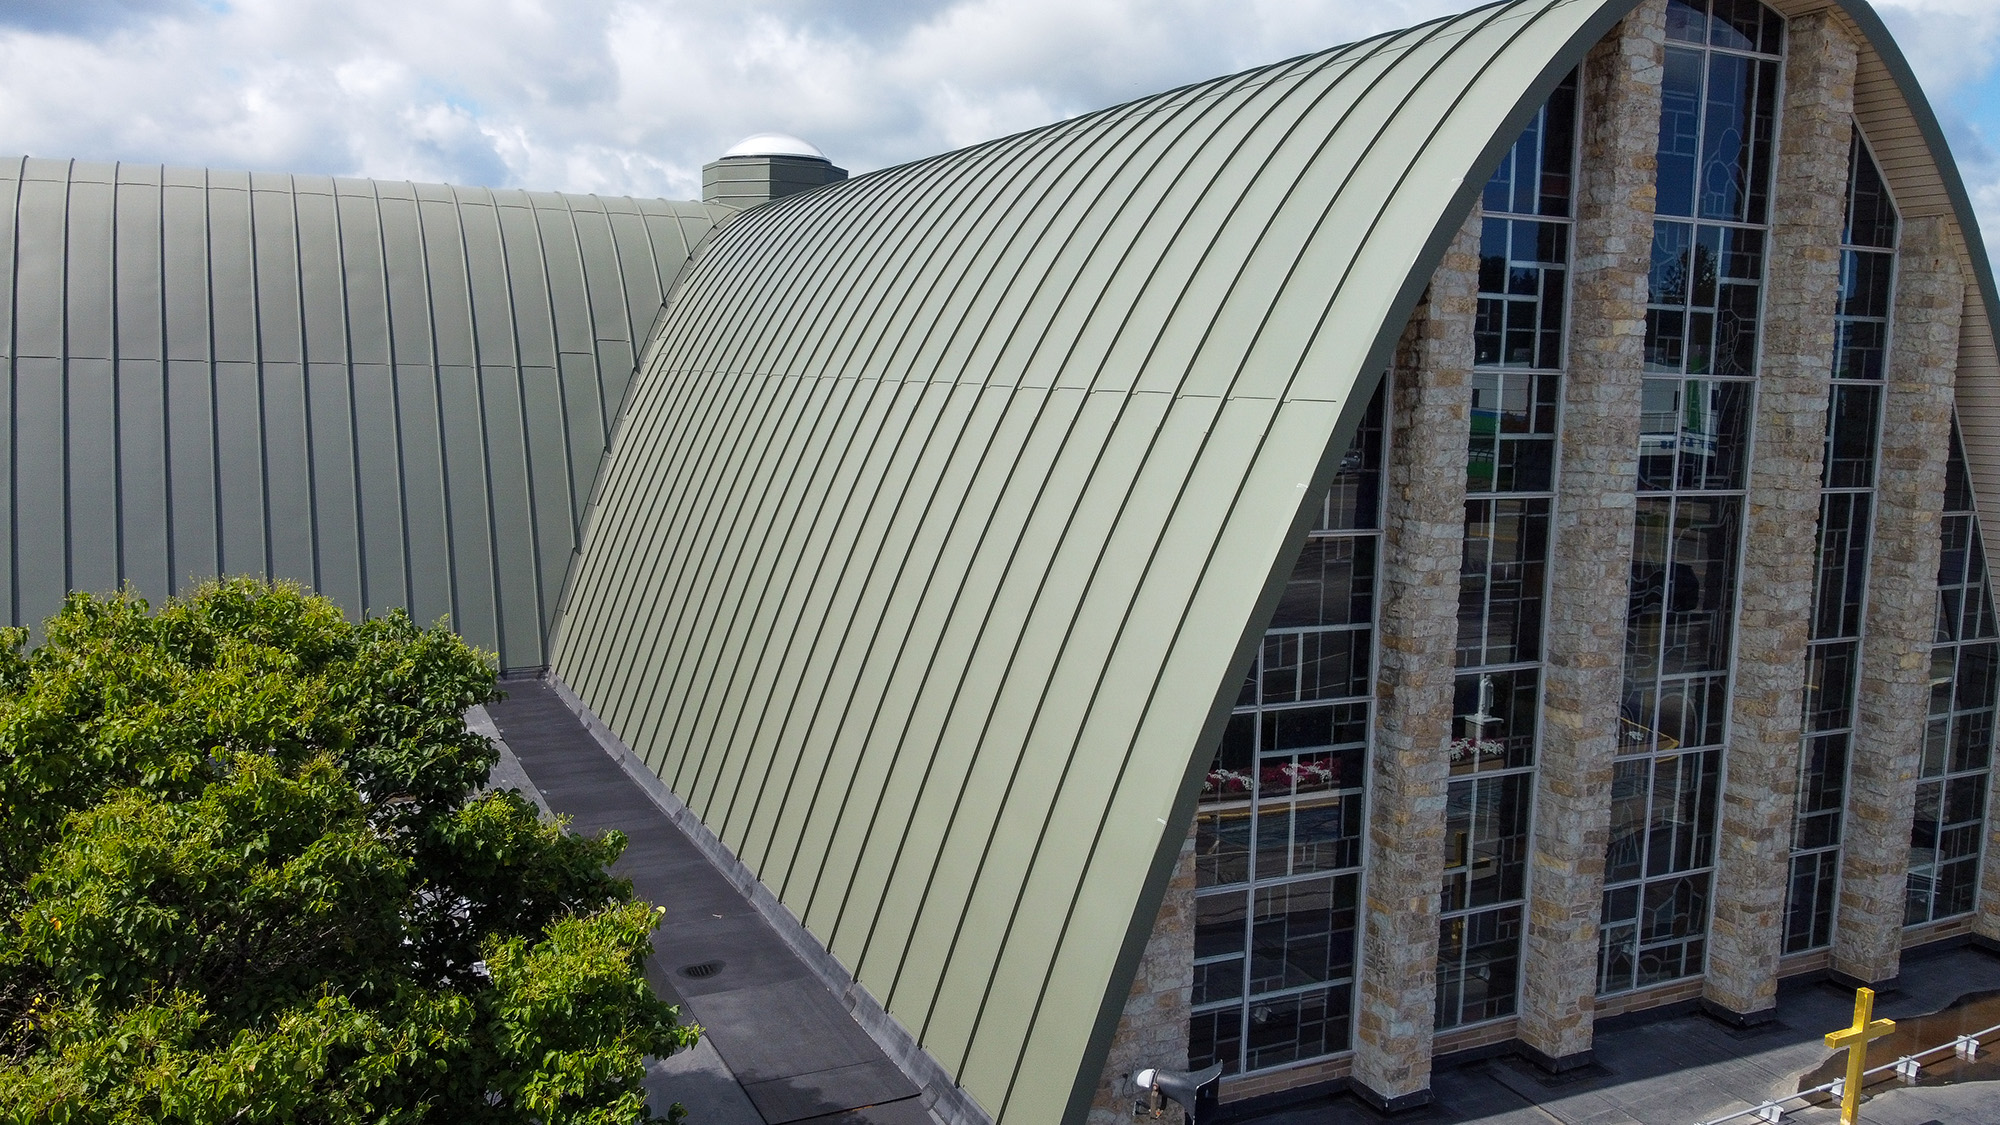 BattenTite architectural metal roof panels